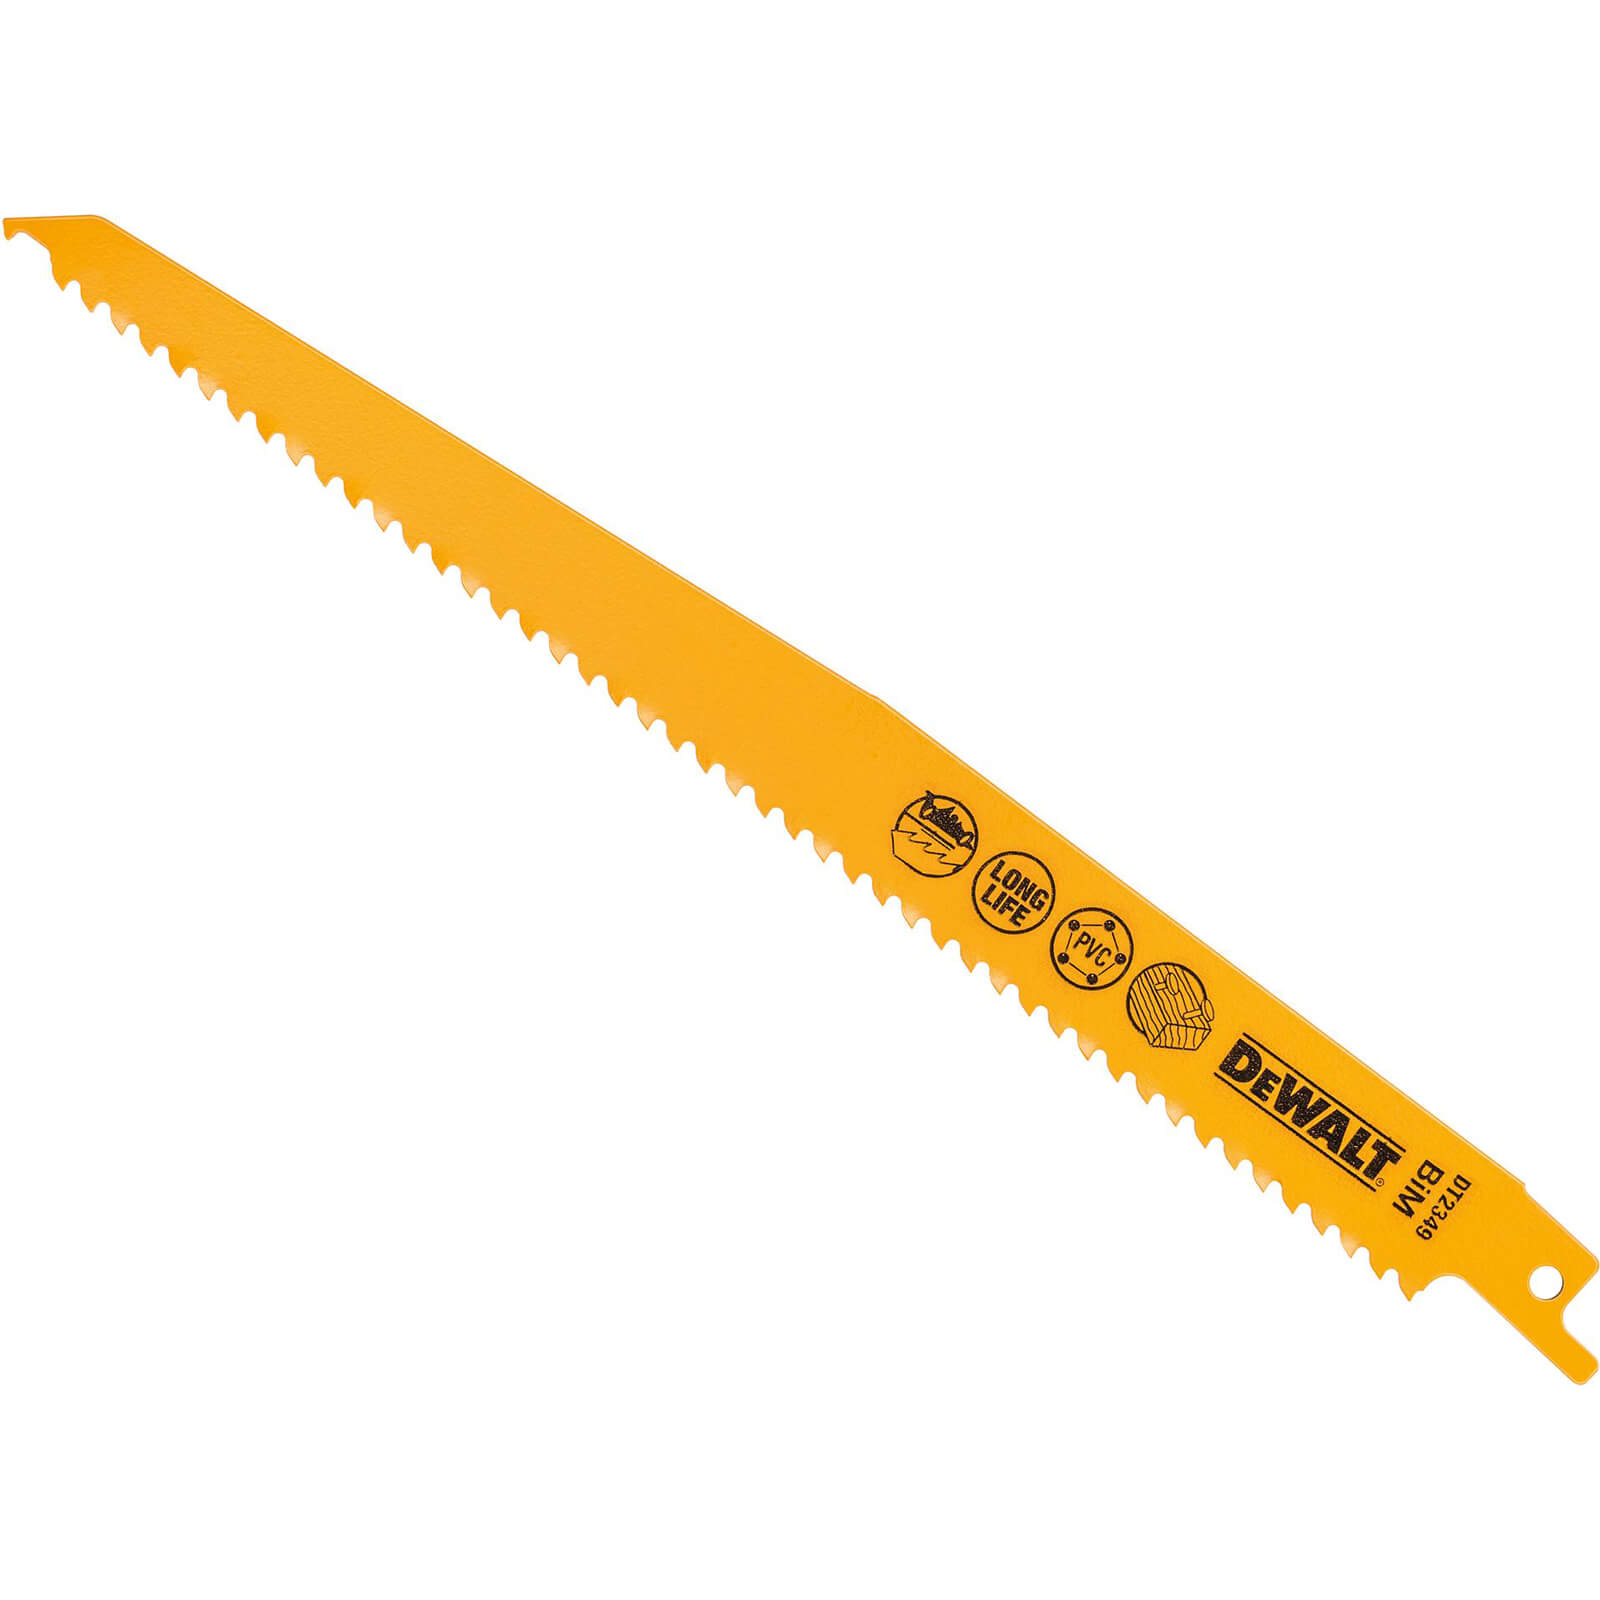 DeWalt DT2349 Bi Metal Reciprocating Saw Blade for Fast Cuts in Wood with Nails Plastics 228mm